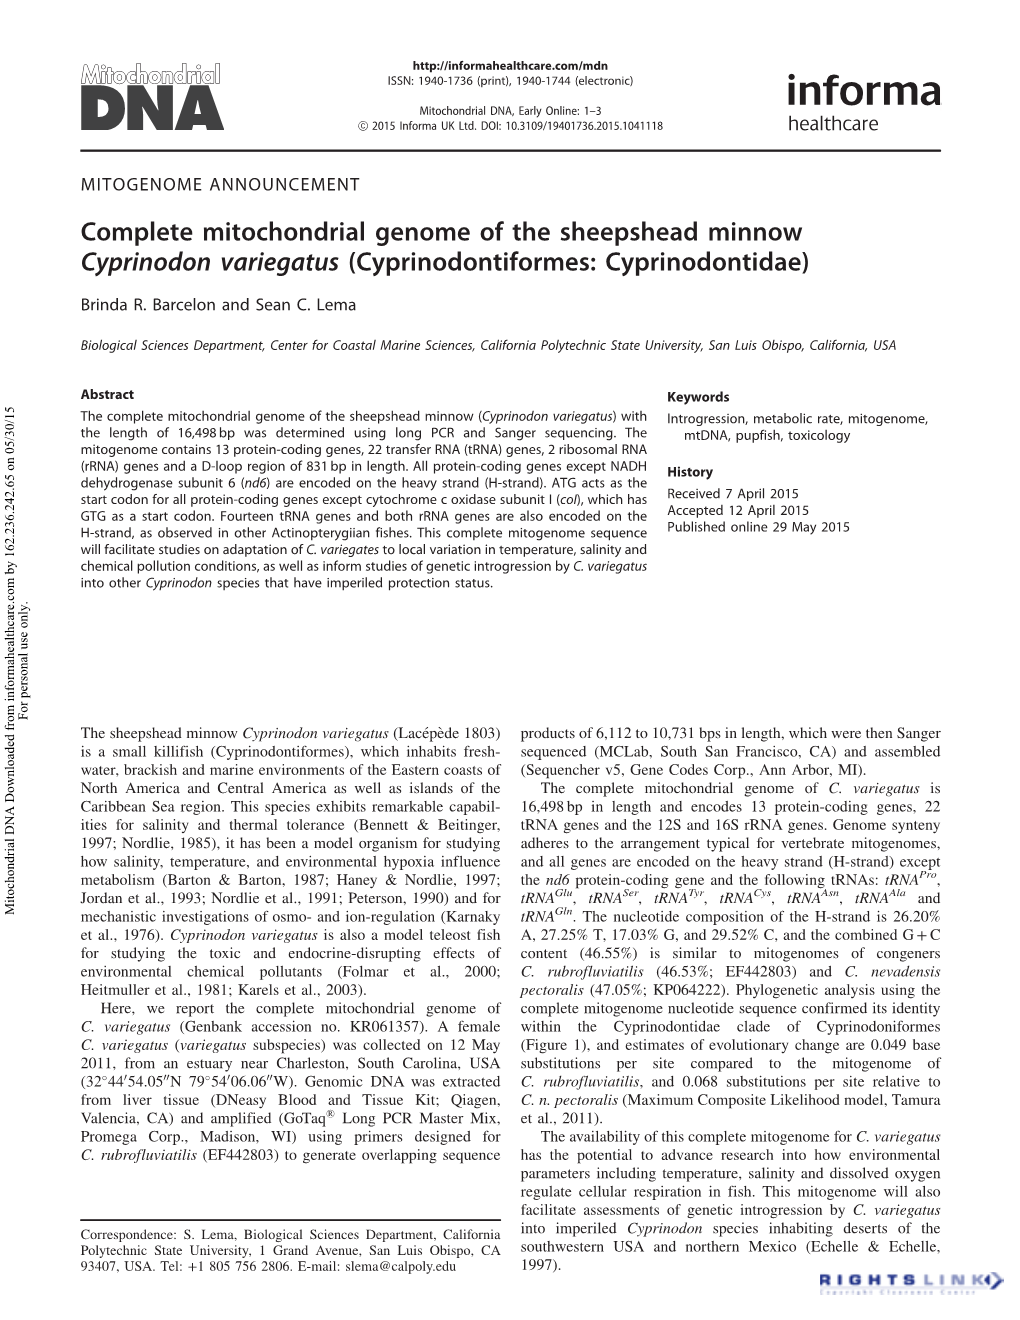 Complete Mitochondrial Genome of the Sheepshead Minnow Cyprinodon Variegatus (Cyprinodontiformes: Cyprinodontidae)